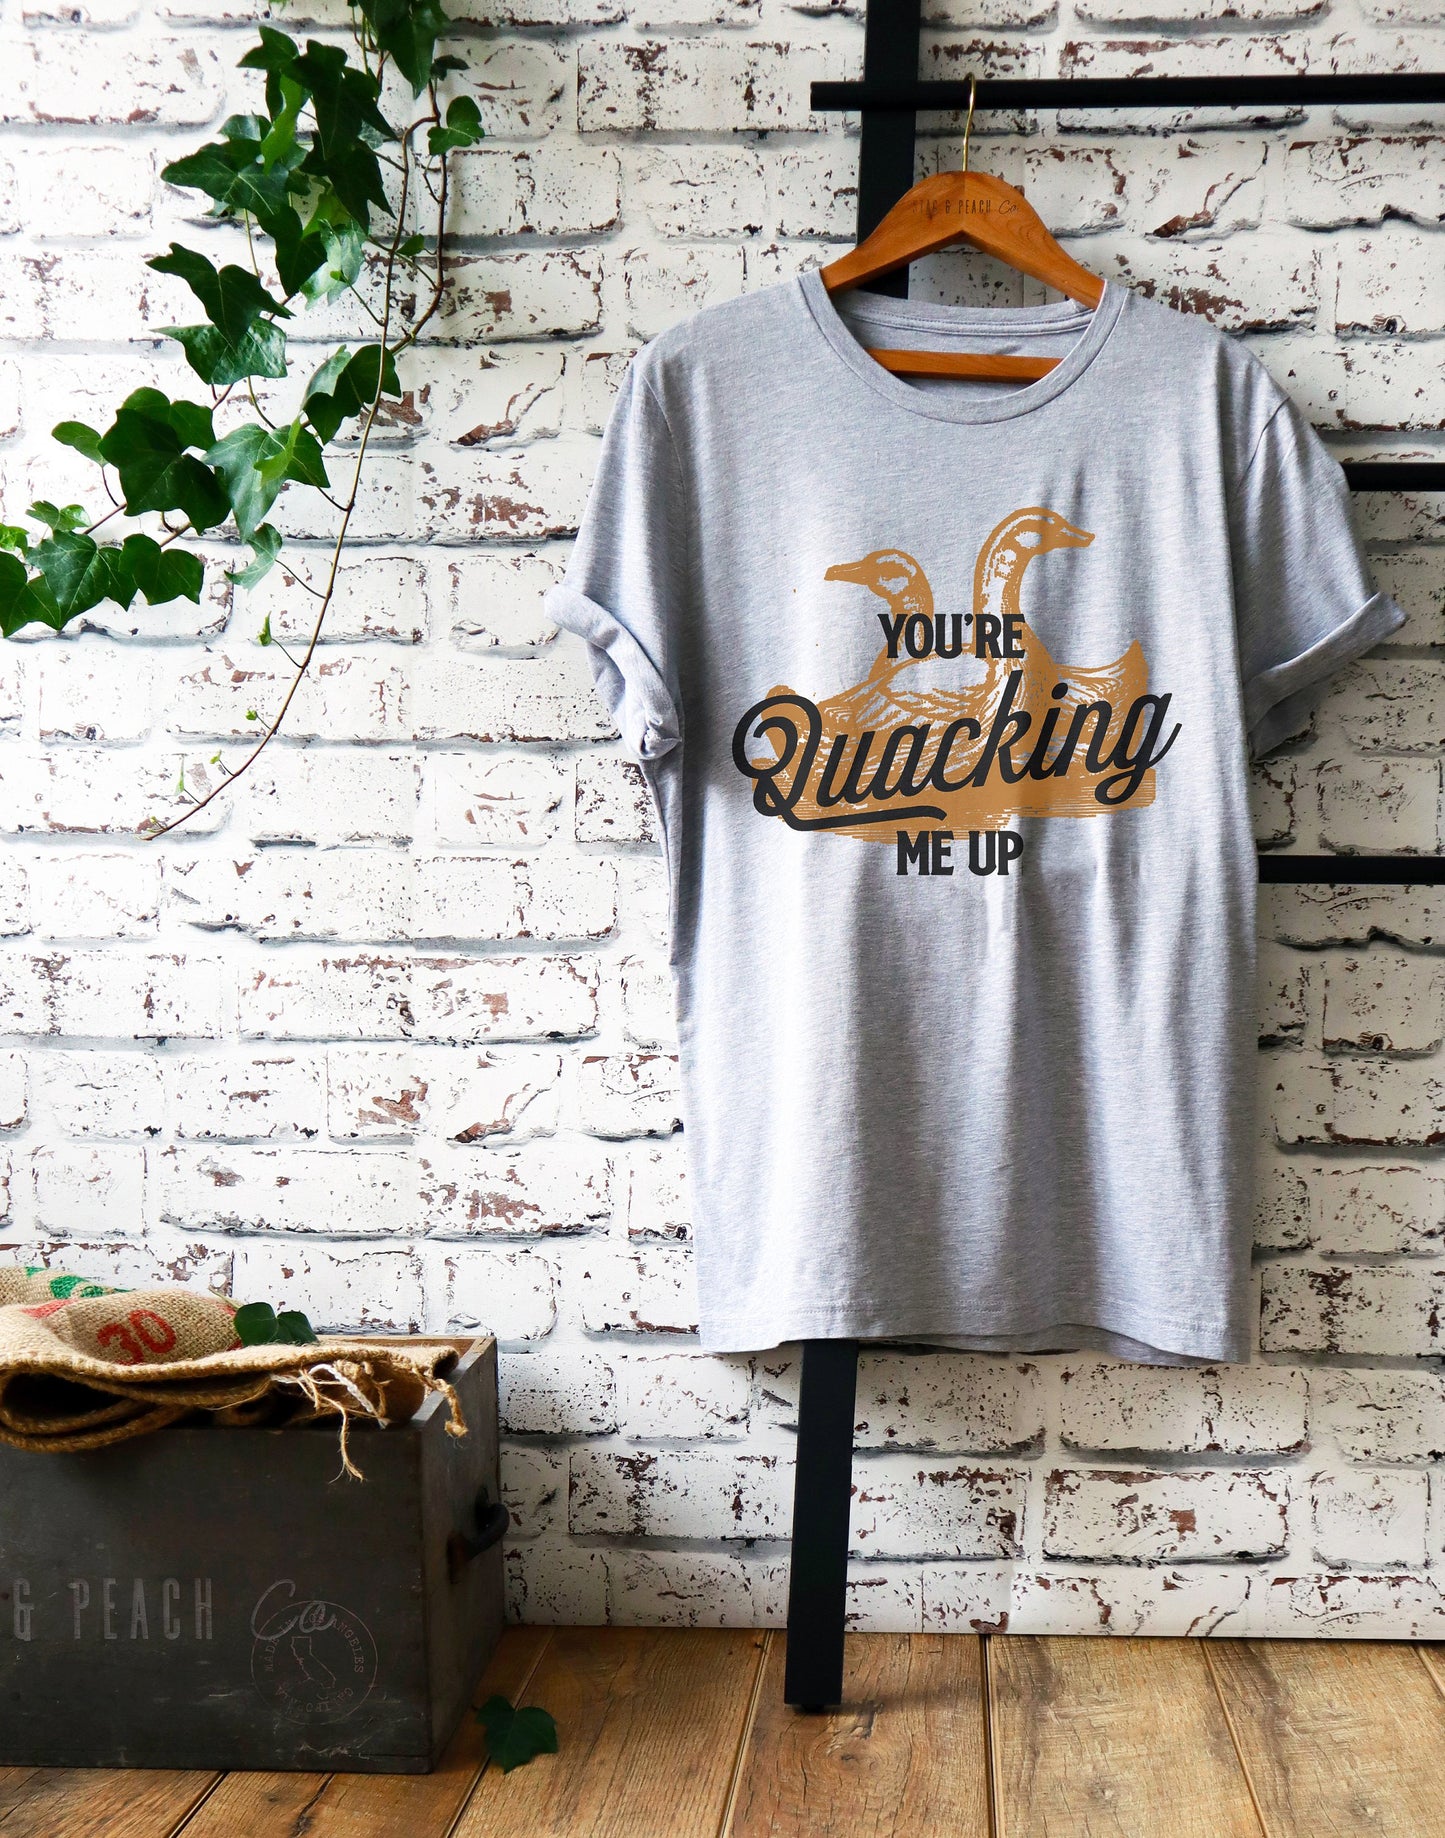 You’re Quacking Me Up Unisex Shirt - Duck Shirt, Duck Gift, Farmer Shirt, Farmer Gift, Duck Hunting, Rubber Duck, Duck Lover Gift